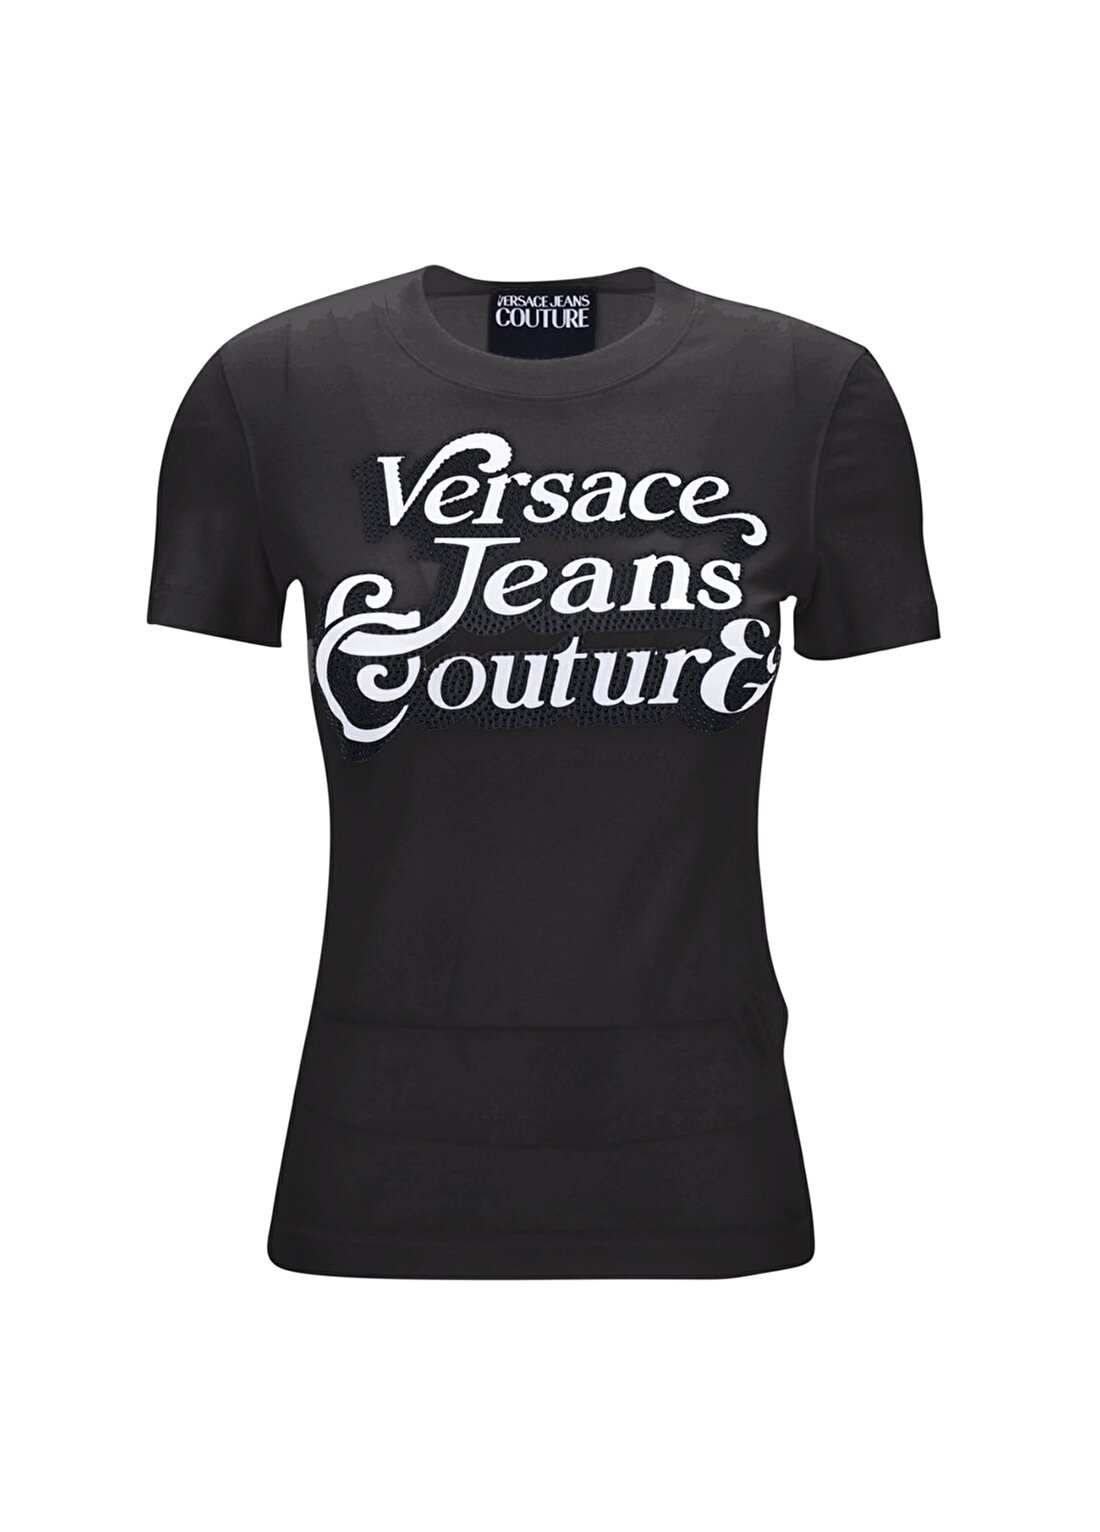 Versace Jeans Couture Bisiklet Yaka Baskılı Siyah Kadın T-Shirt 75HAHG02